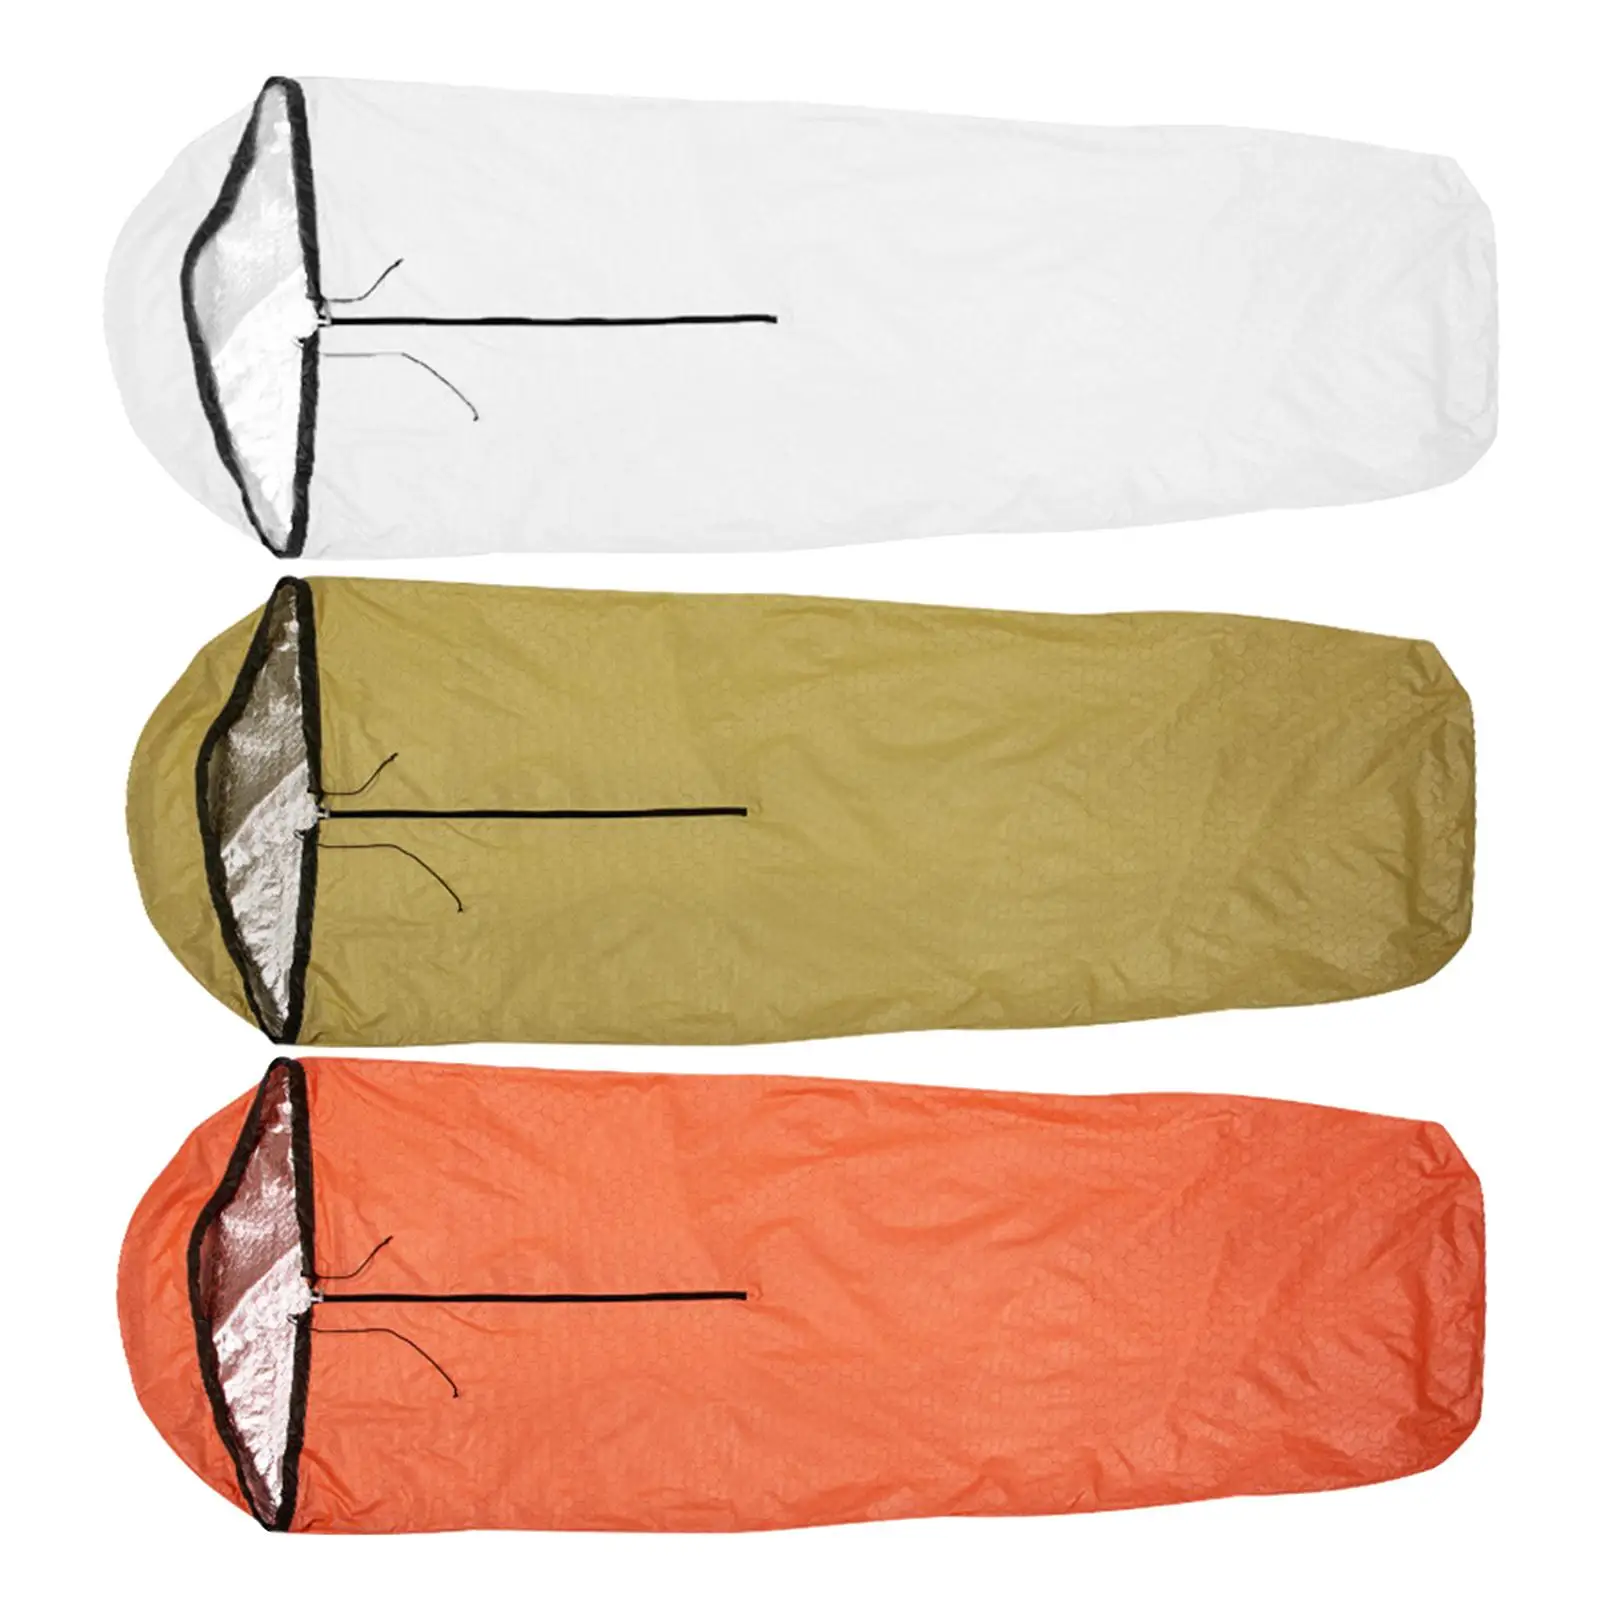 Emergency Sleeping Bag Waterproof for Outdoor Survival Activities Hunting